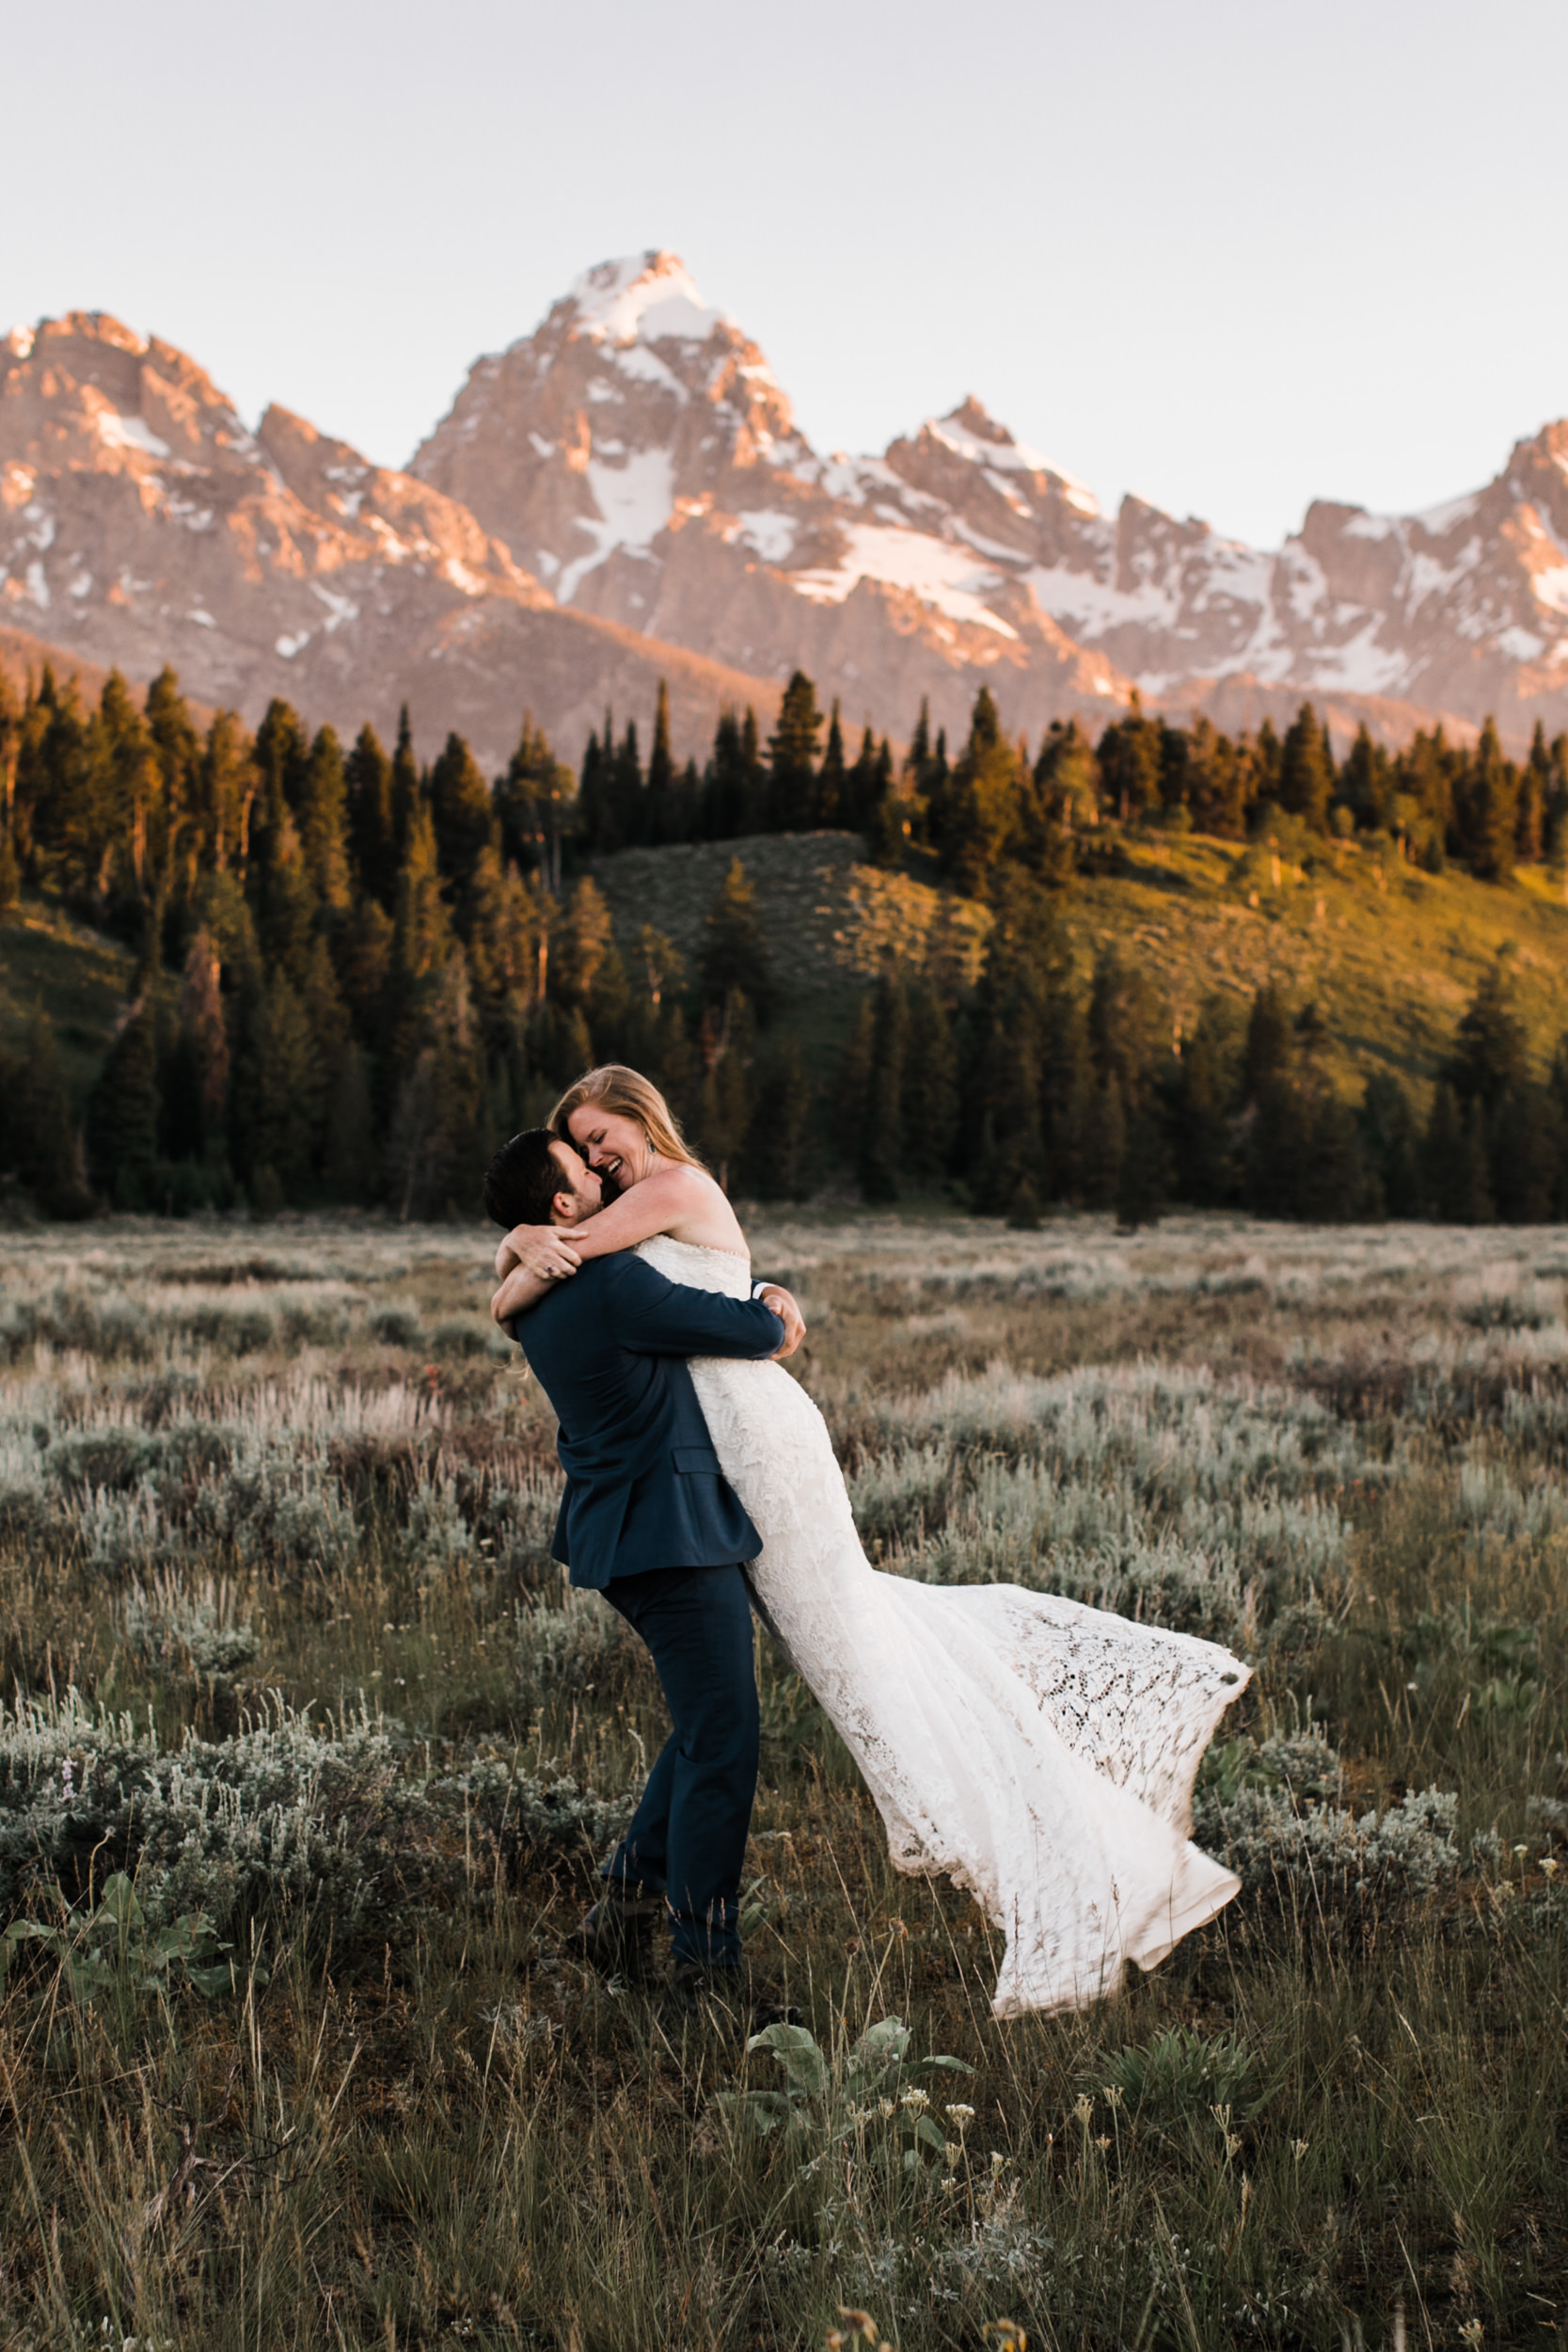 tara + david's post-wedding adventure portrait session in grand teton national park | jackson, wyoming wedding photographer | the hearnes adventure photography